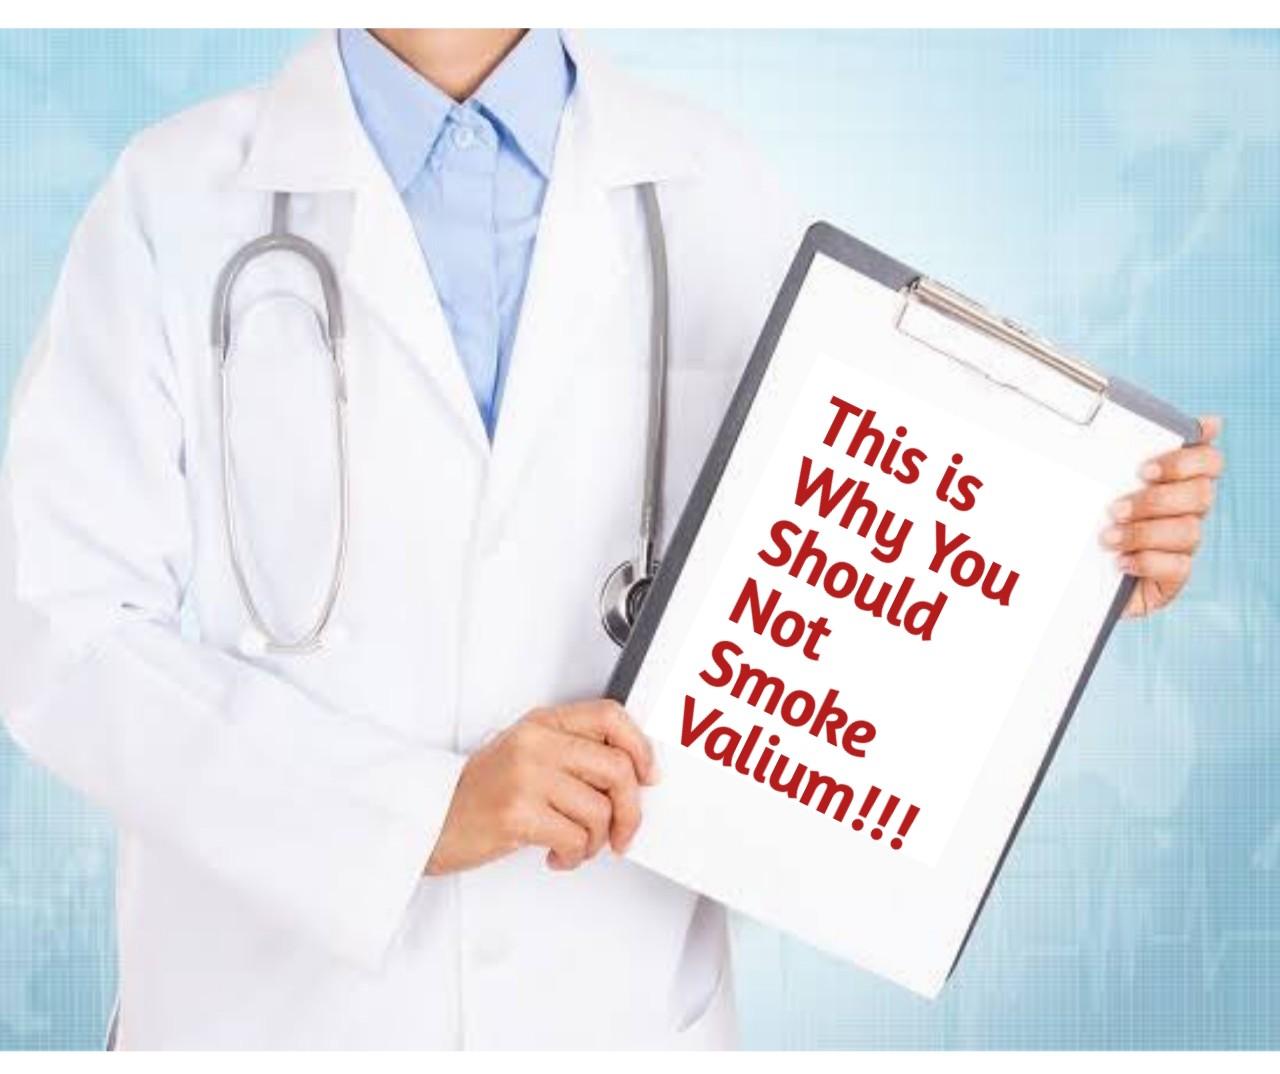 Can You Smoke Valium